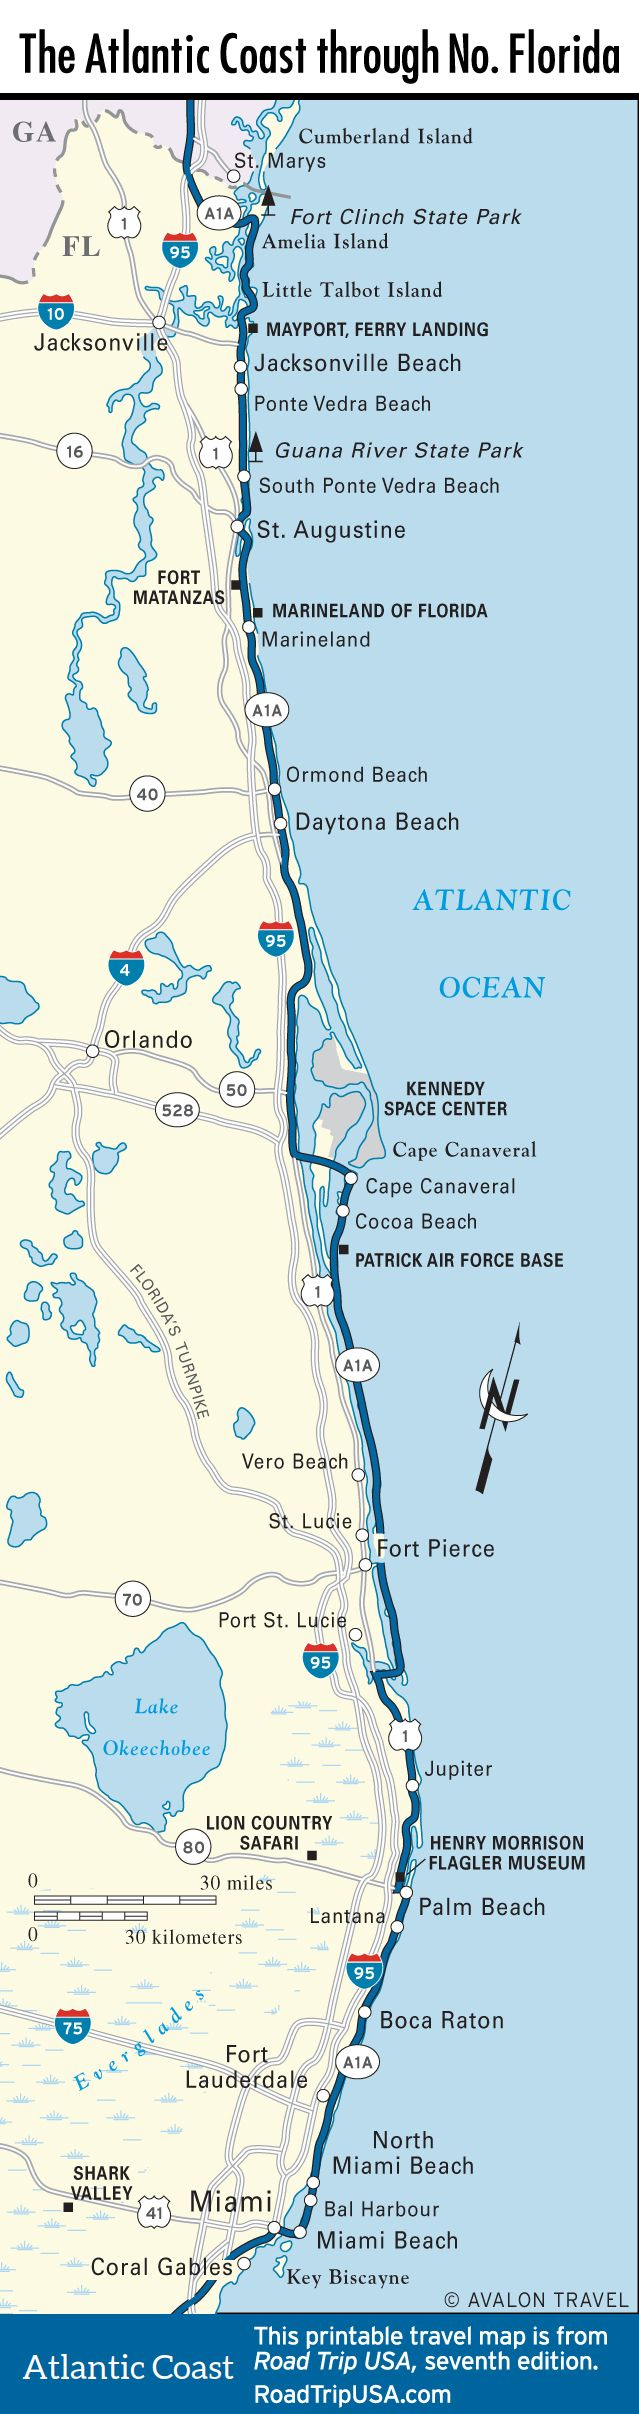 Florida ROAD TRIP USA Florida Travel Map Of Florida Beaches Trip